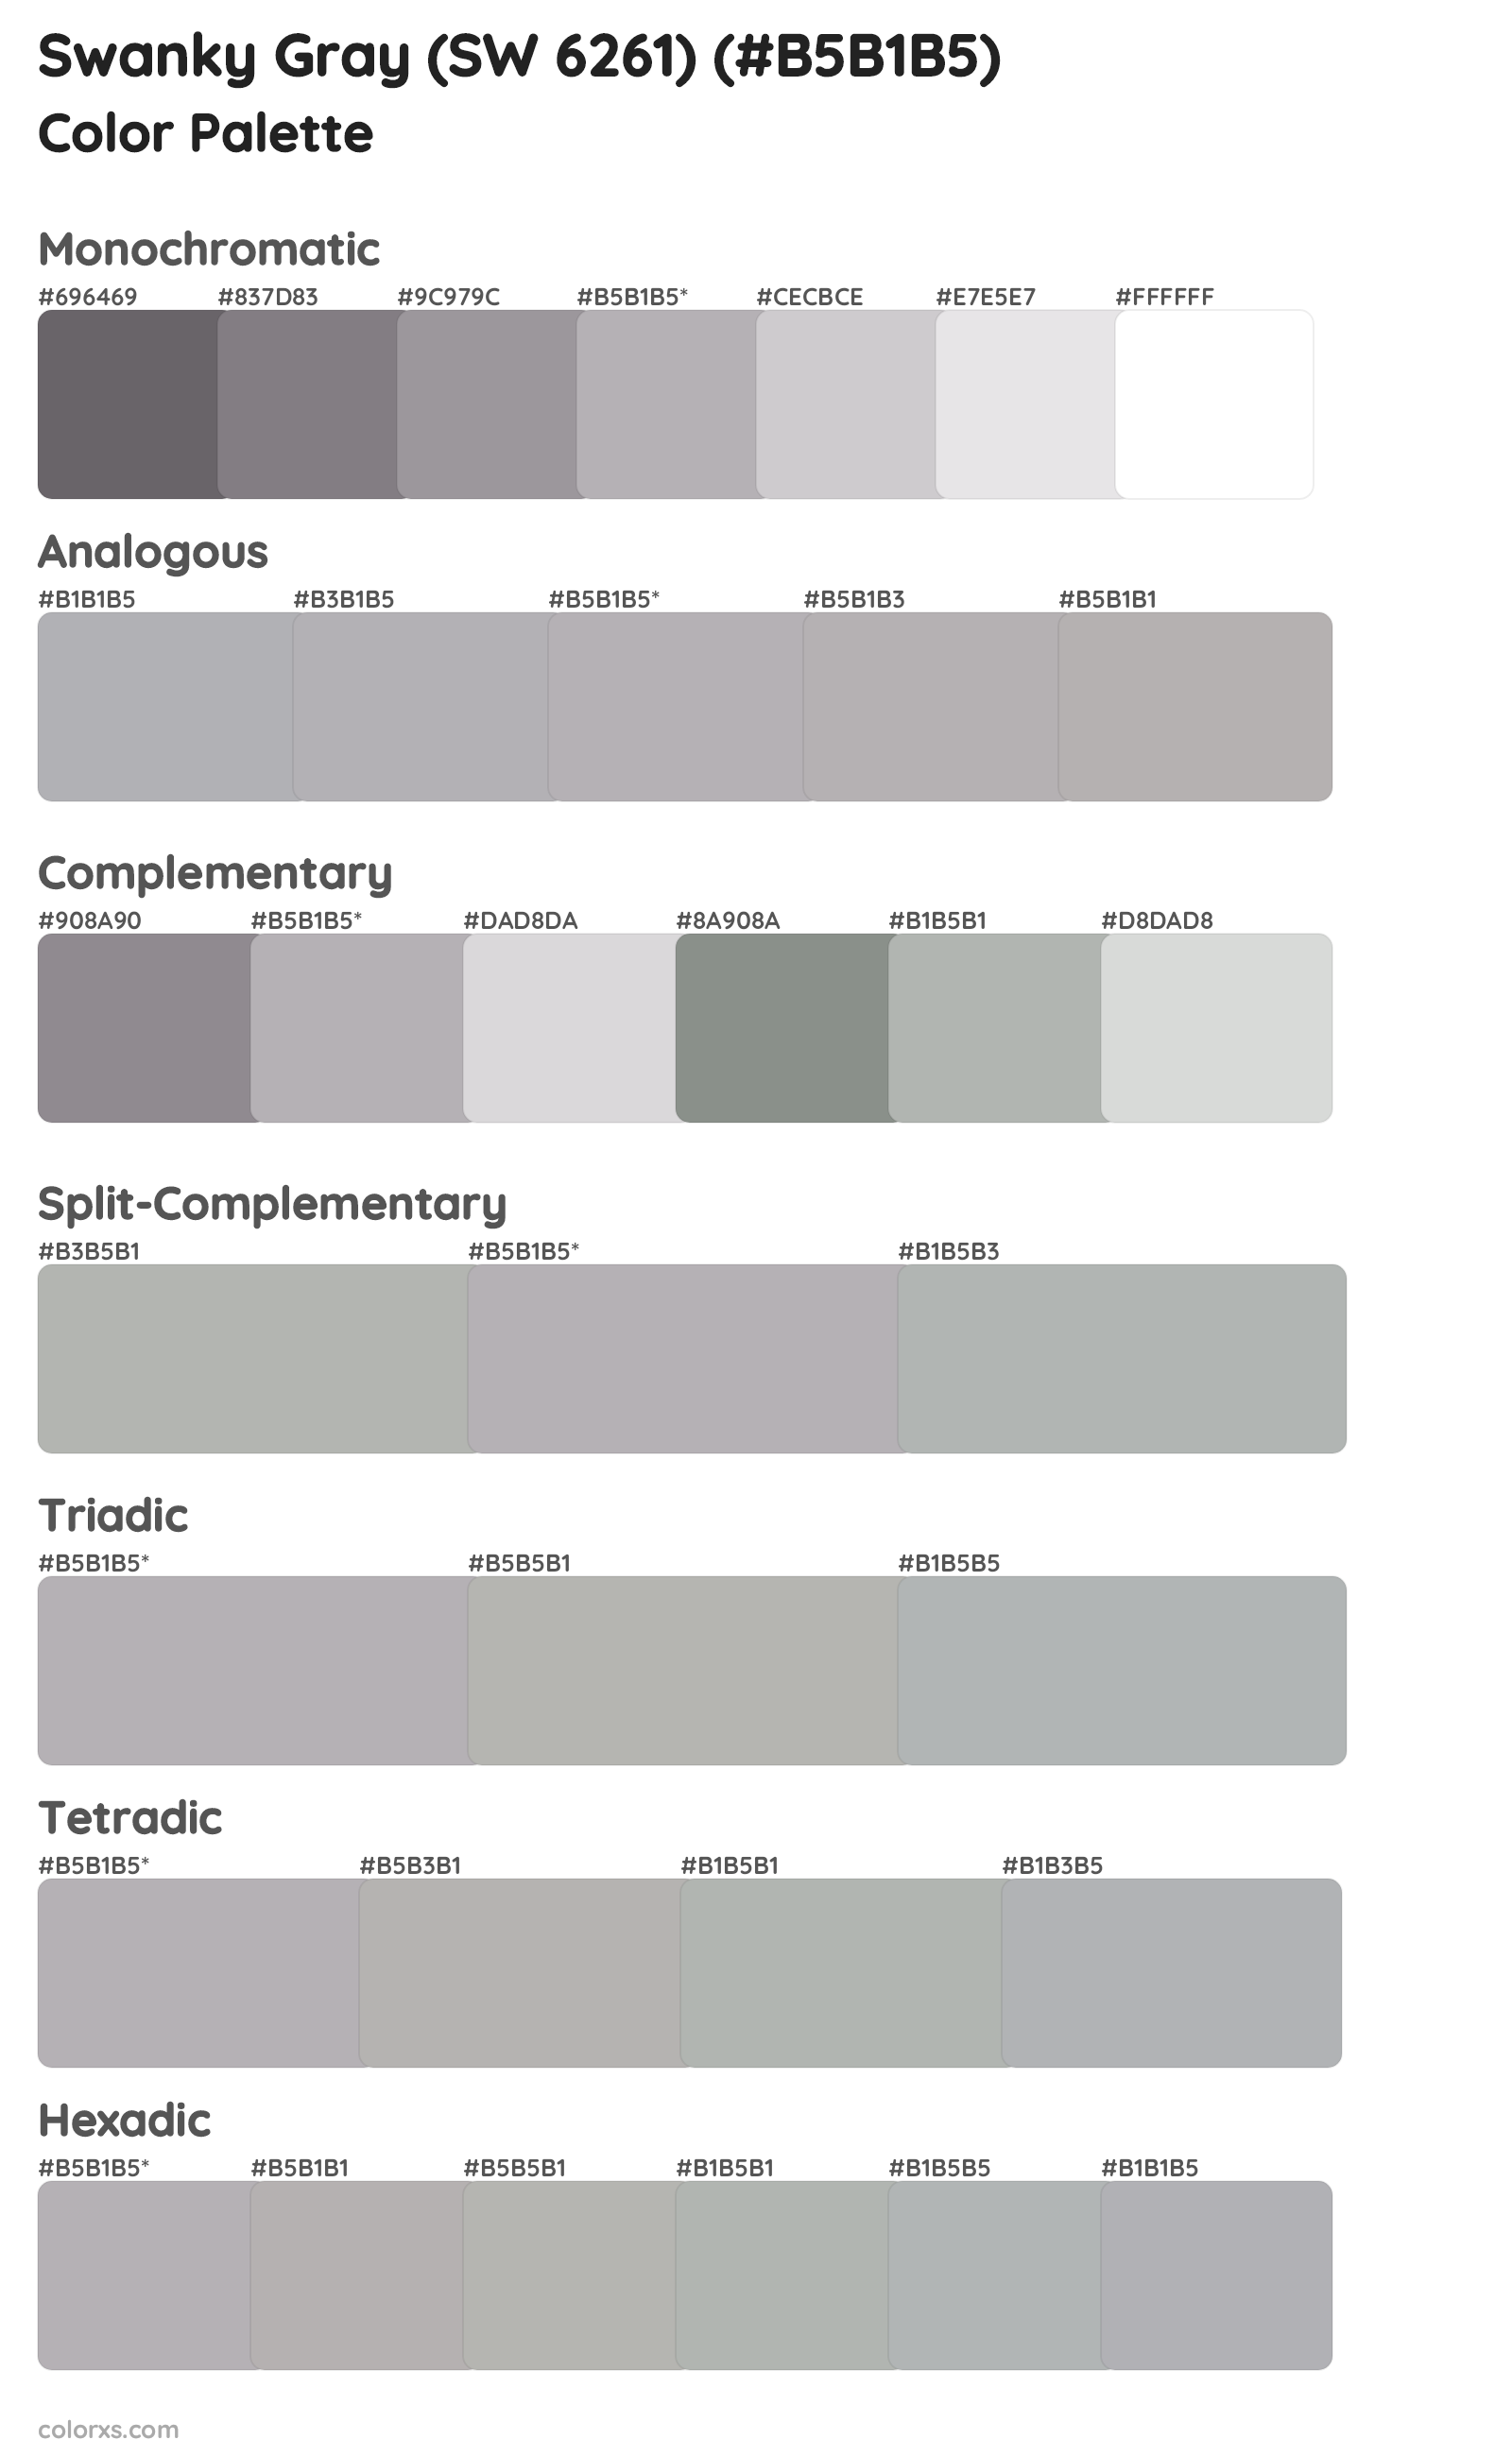 Swanky Gray (SW 6261) Color Scheme Palettes